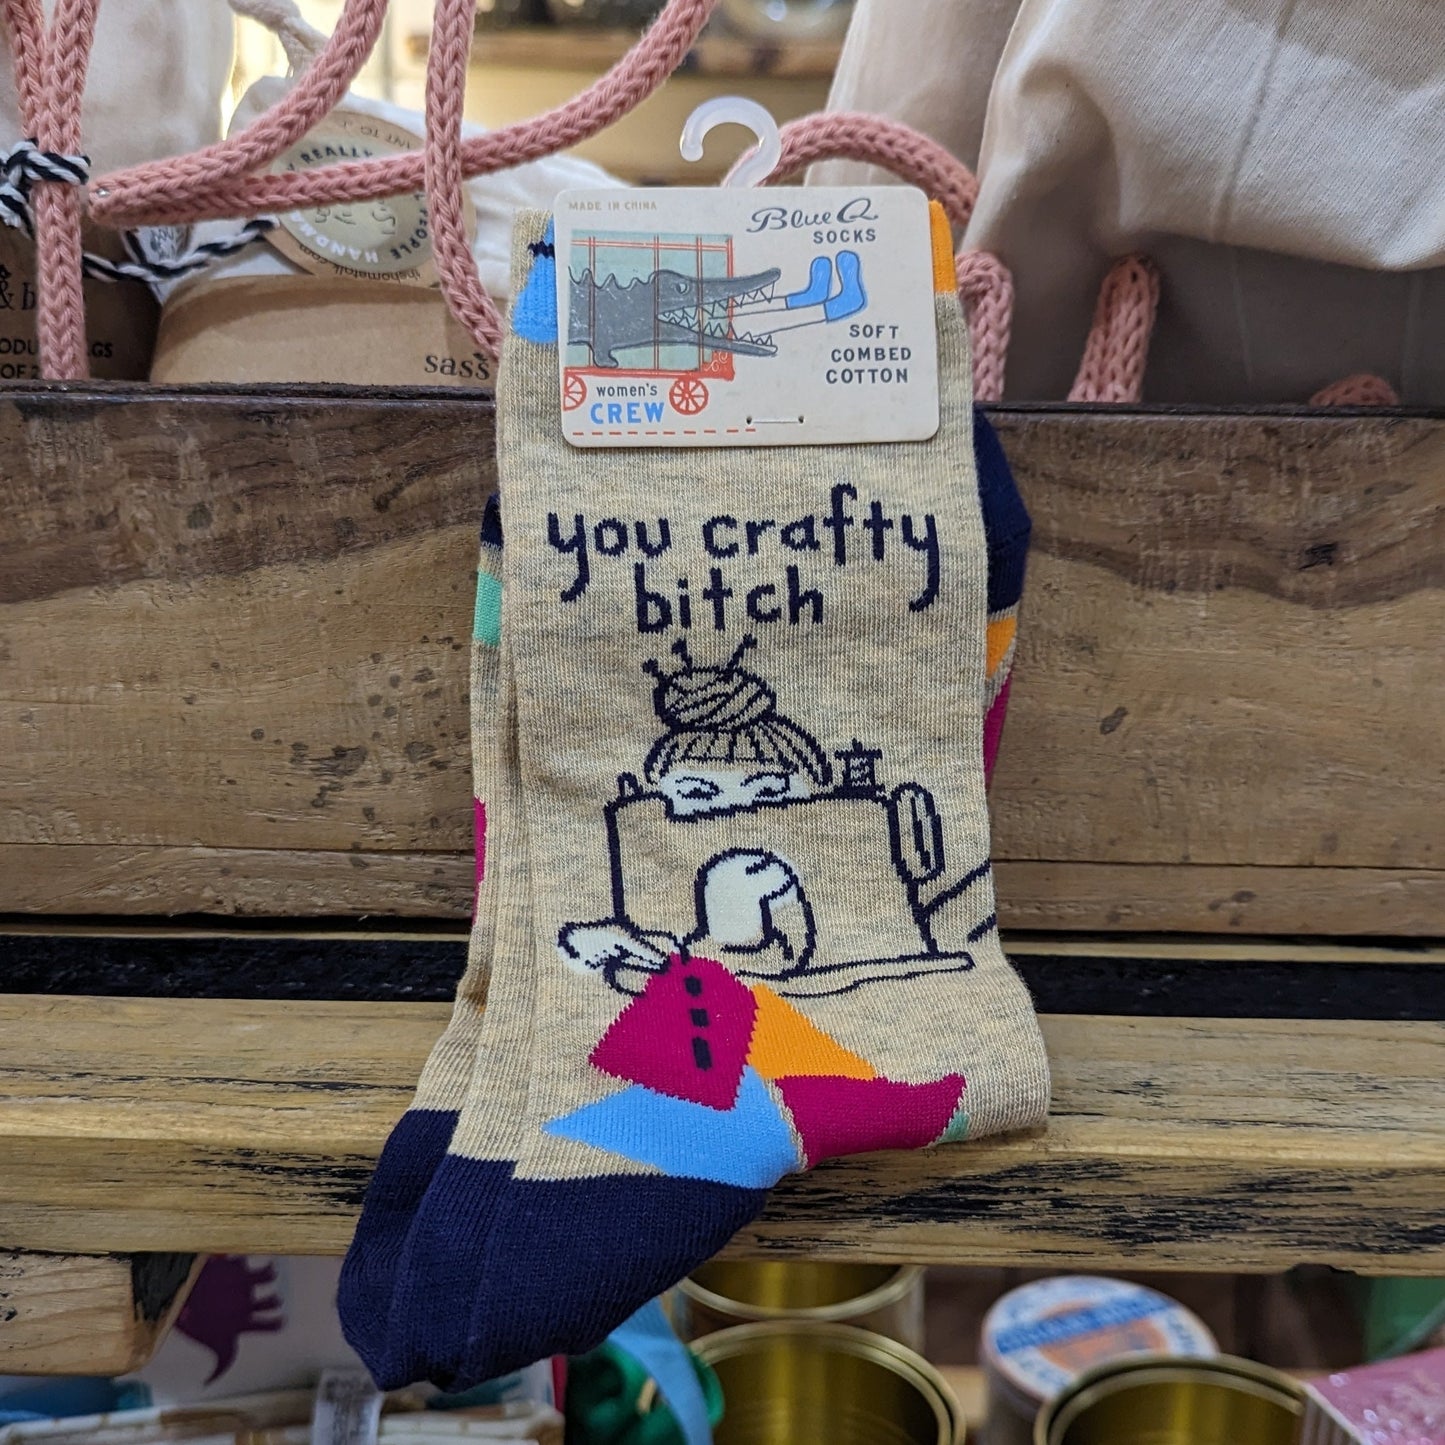 You Crafty Bitch Socks